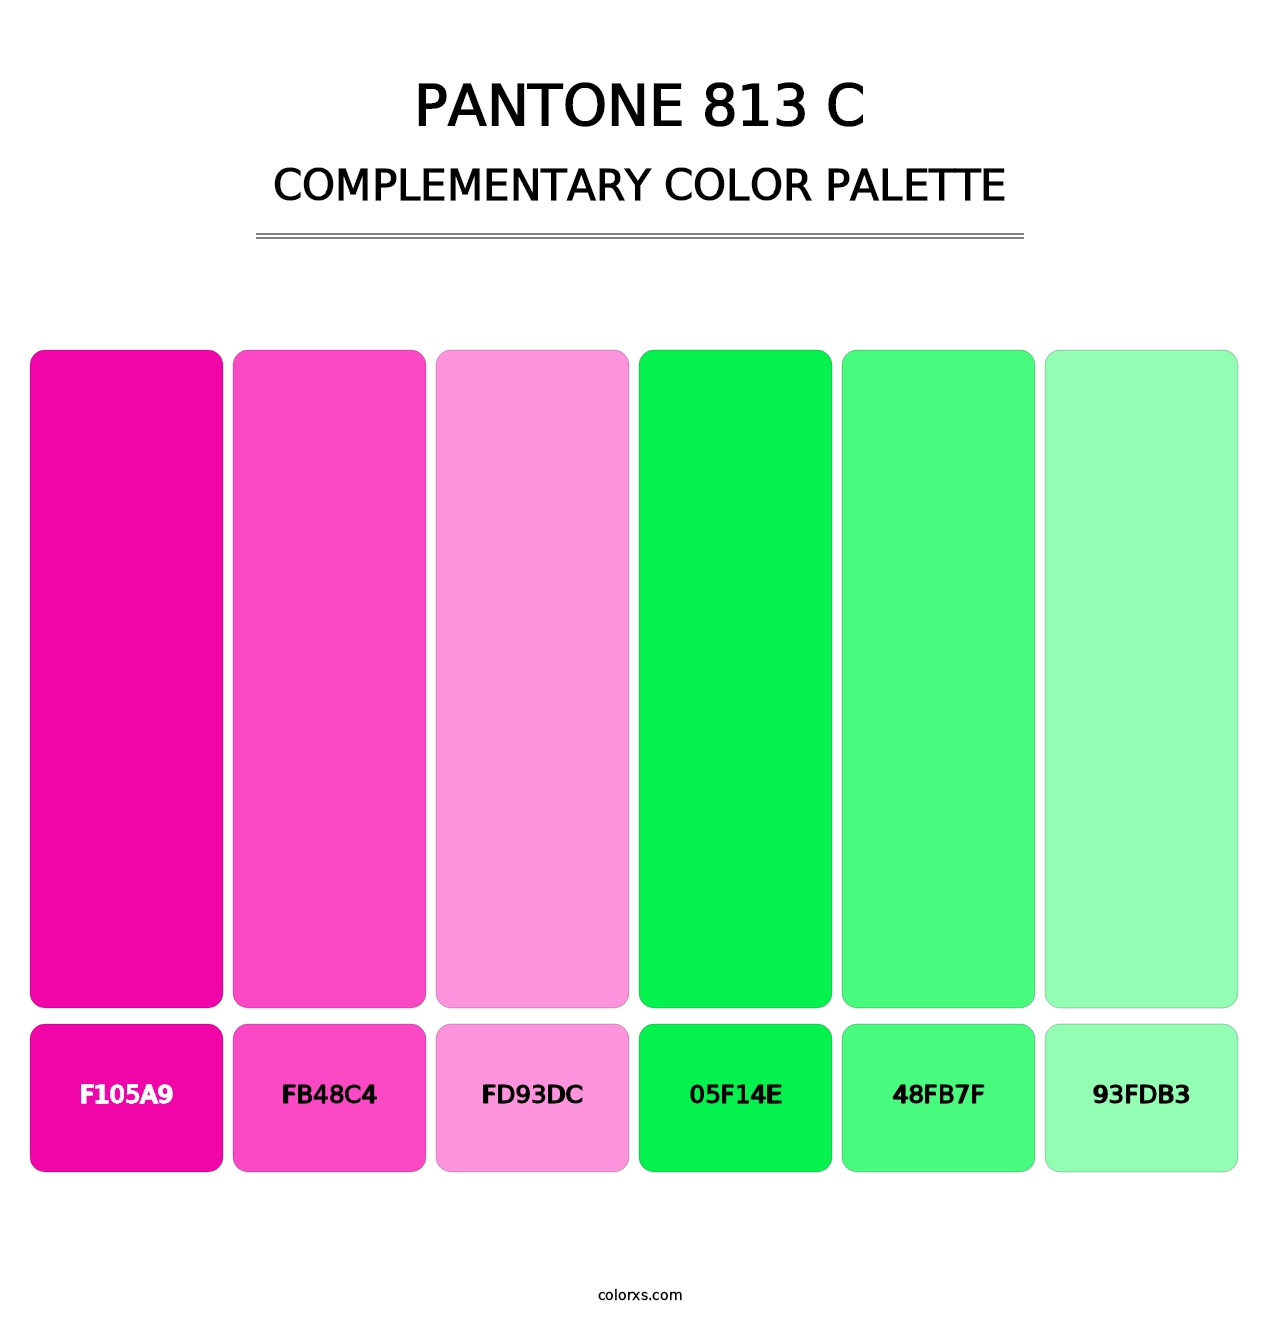 PANTONE 813 C - Complementary Color Palette